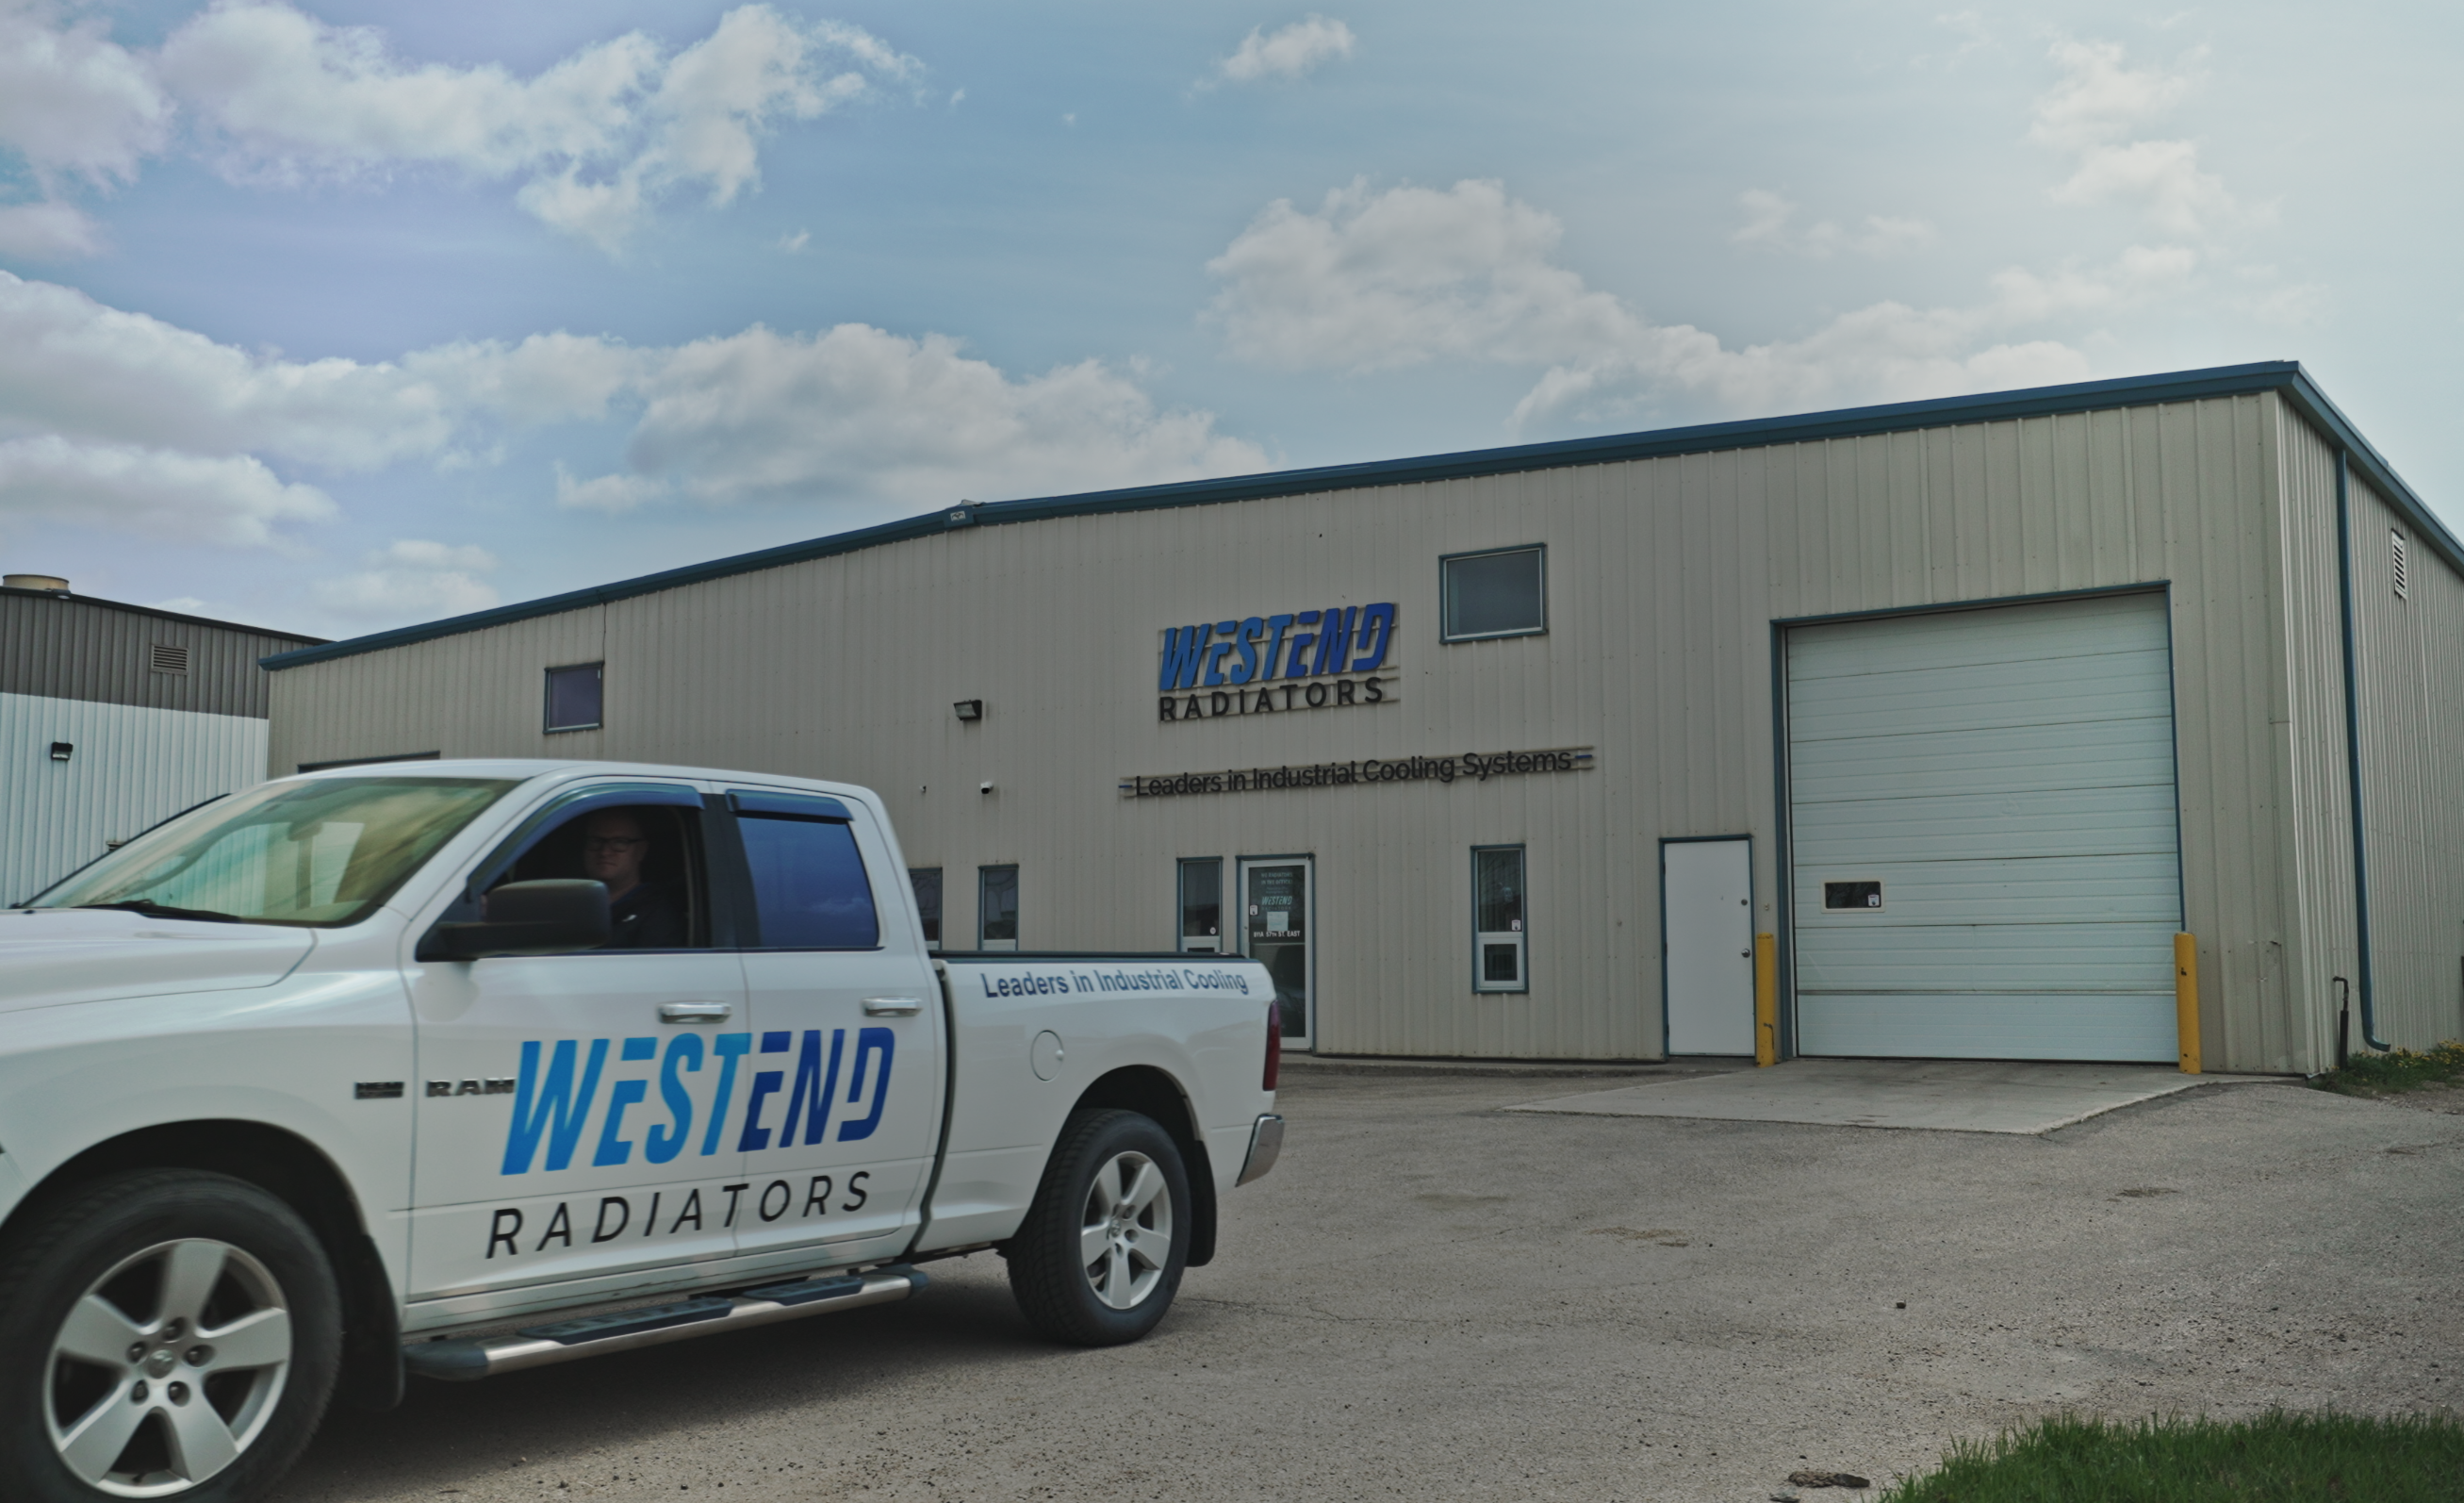 Introducing Our New Full Service Shop in Saskatoon, Saskatchewan